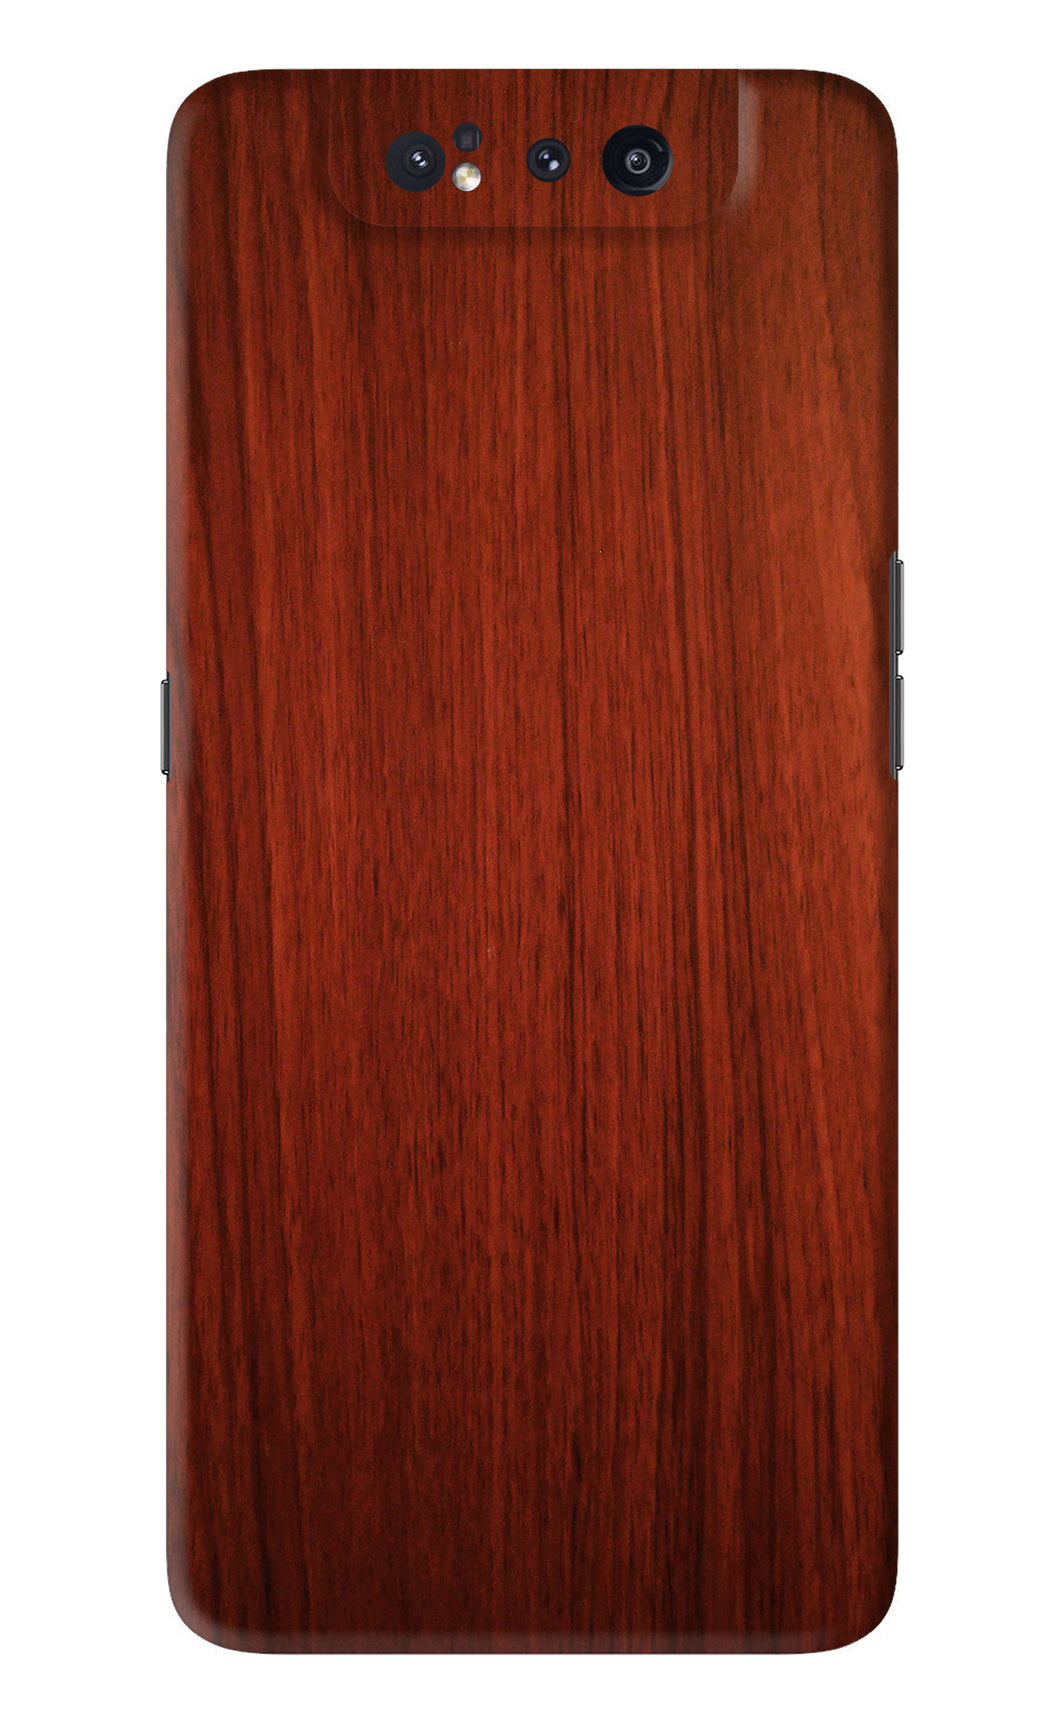 Wooden Plain Pattern Samsung Galaxy A80 Back Skin Wrap